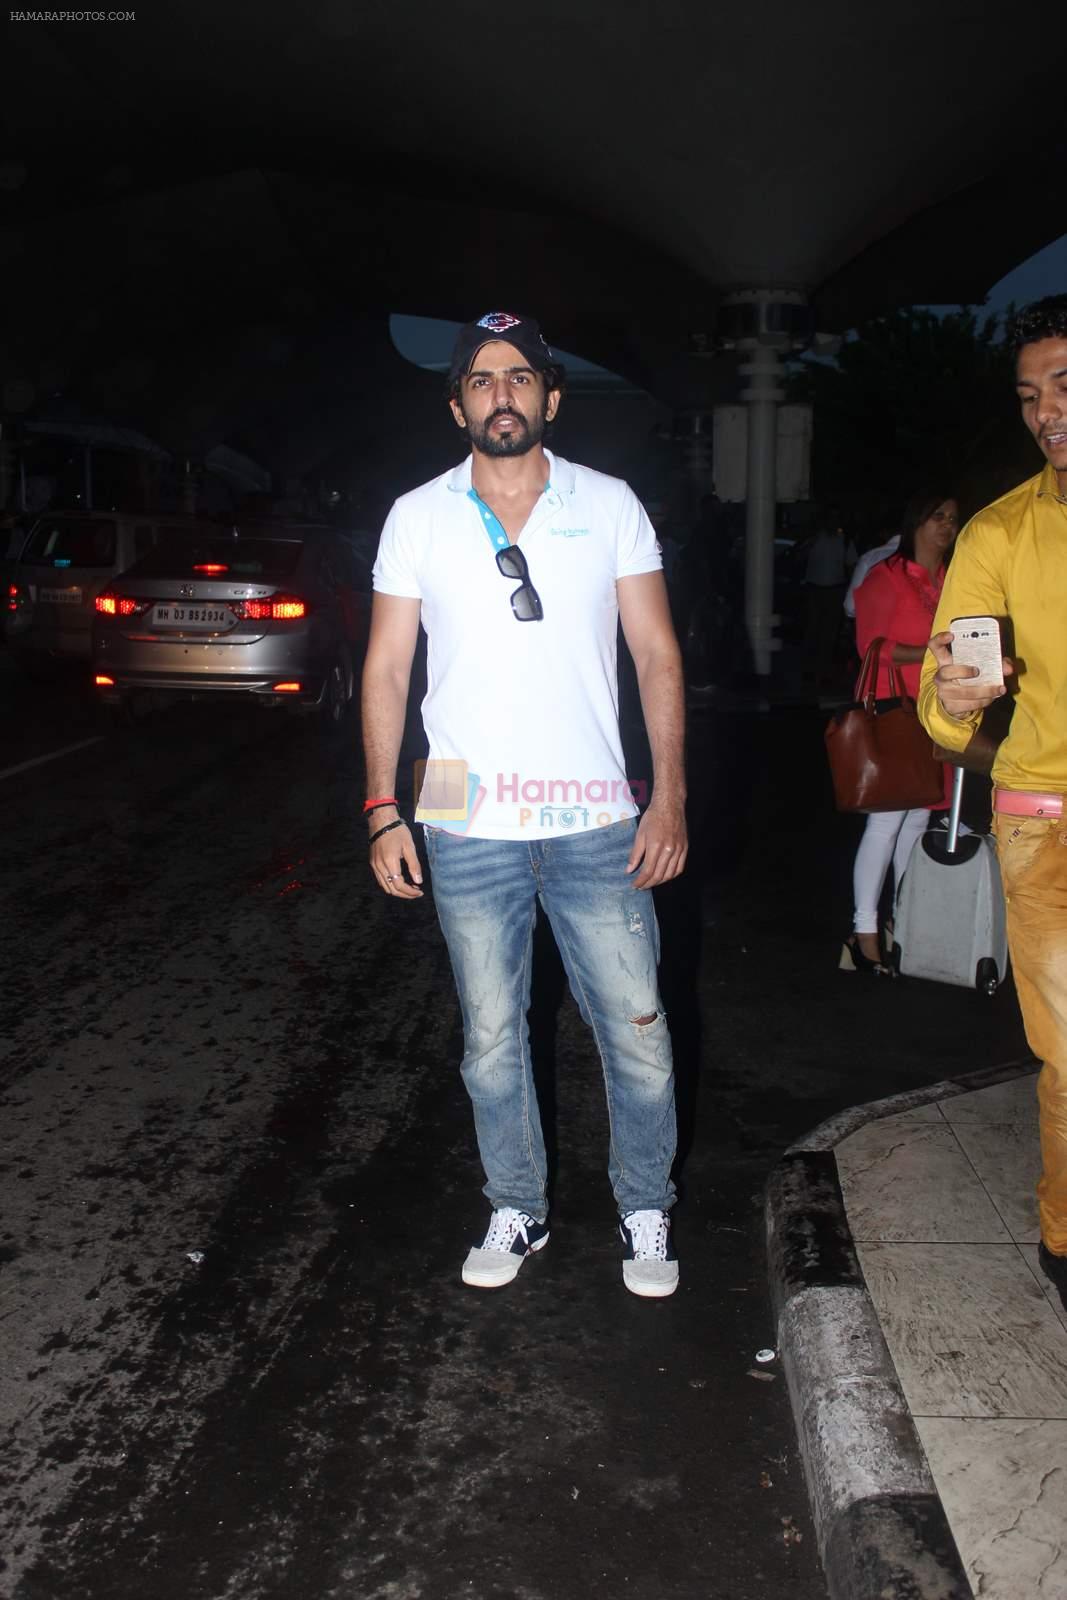 Jay Bhanushali snapped at domestic airport in Mumbai on 22nd June 2015